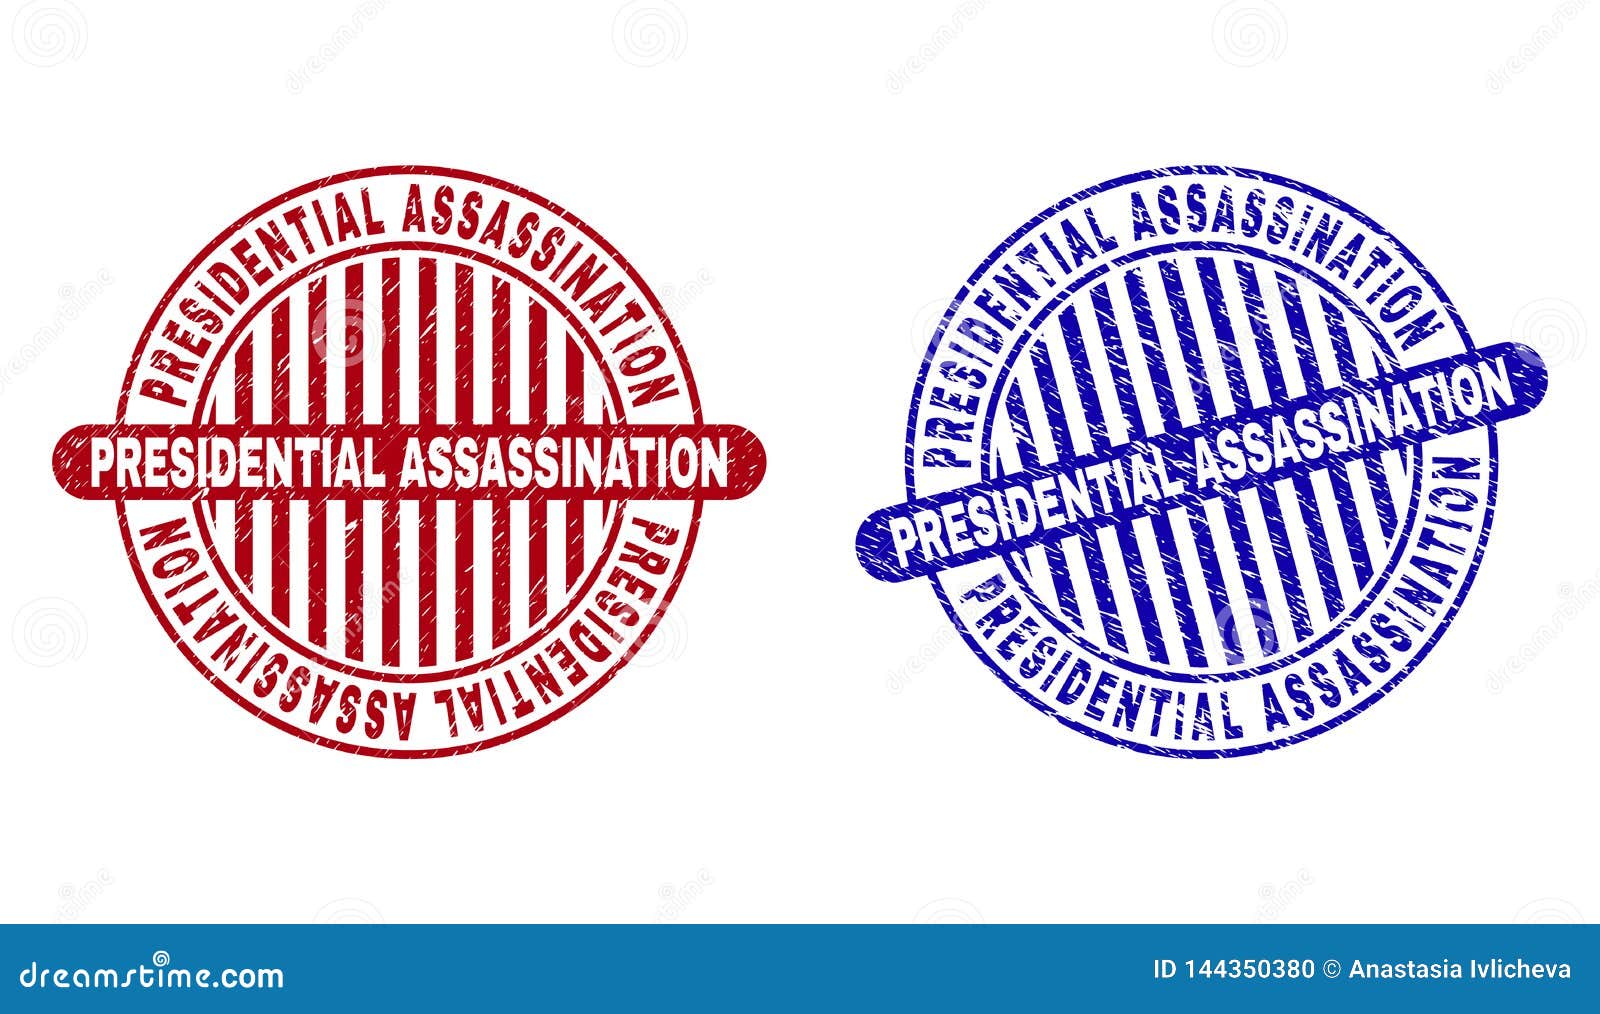 grunge presidential assassination textured round stamps